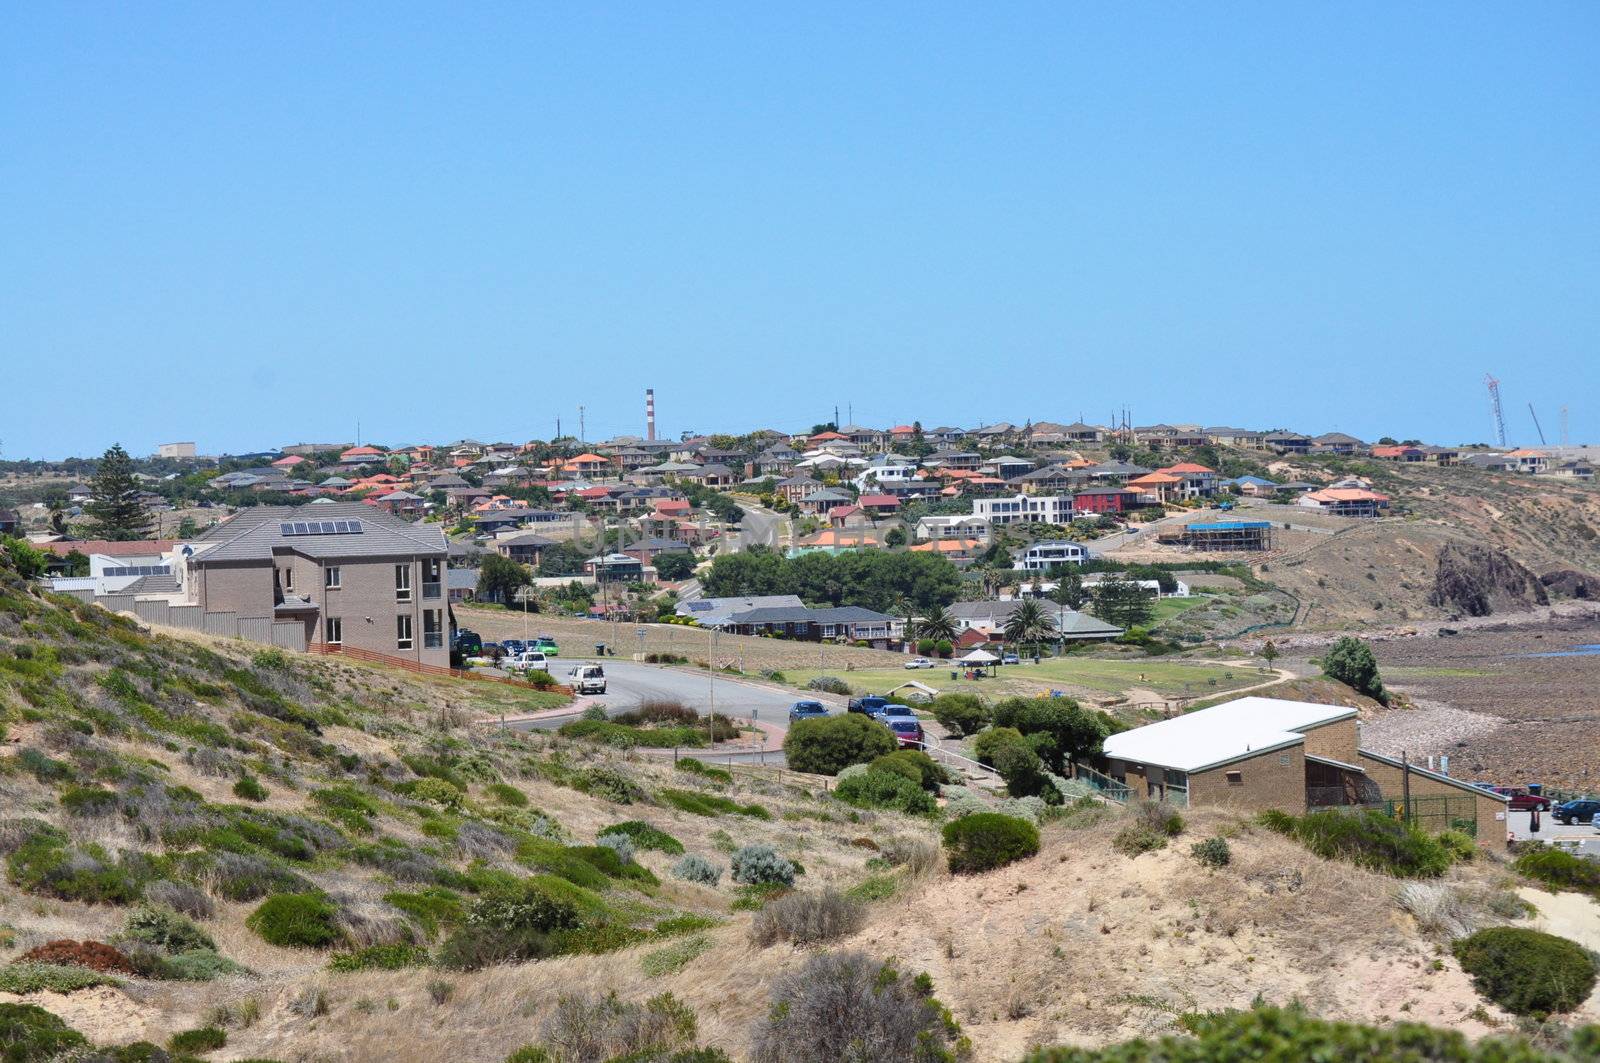 Many Australian Family Houses On The Hills